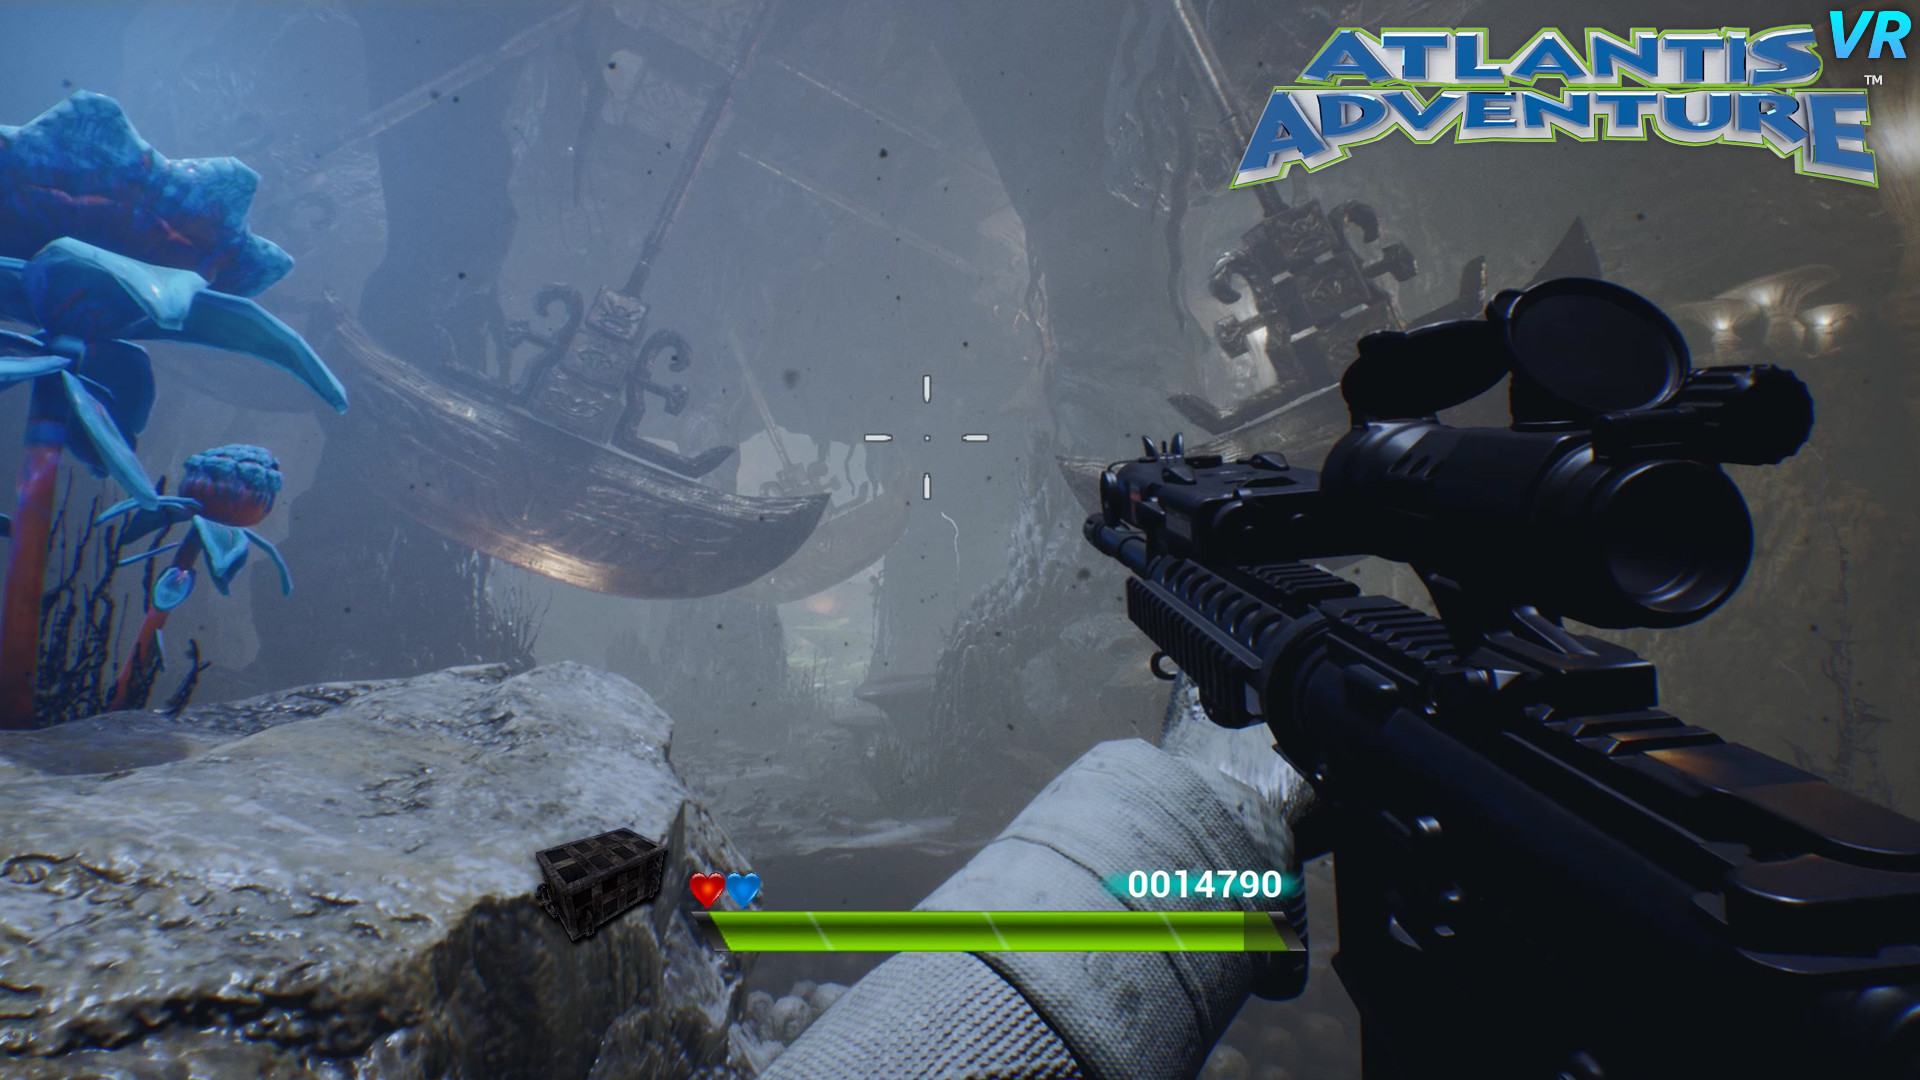 Atlantis Adventure VR screenshot